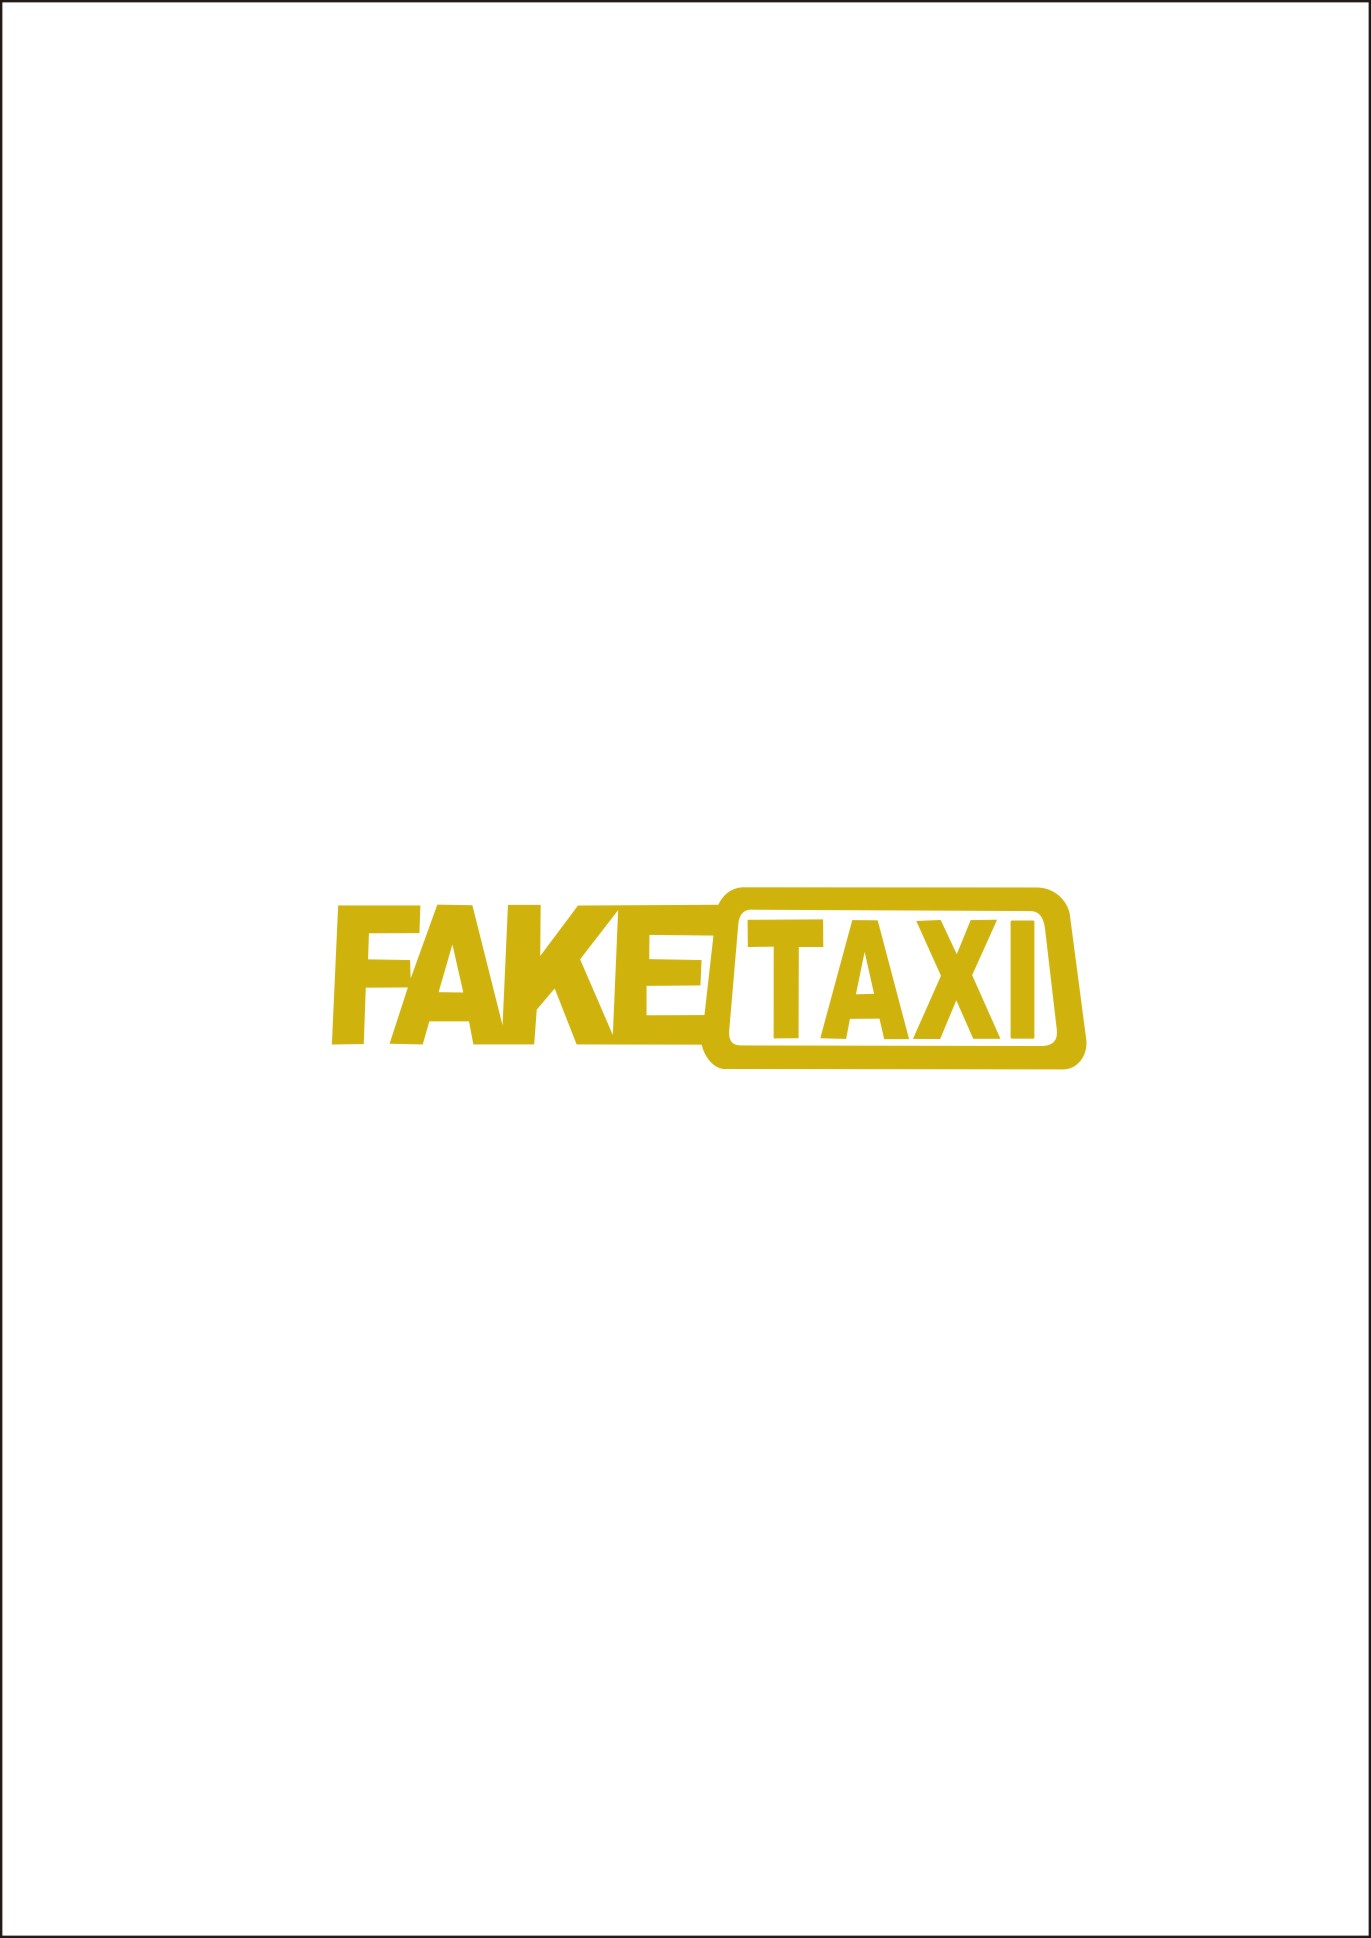 наклейка фэйк такси fake taxi